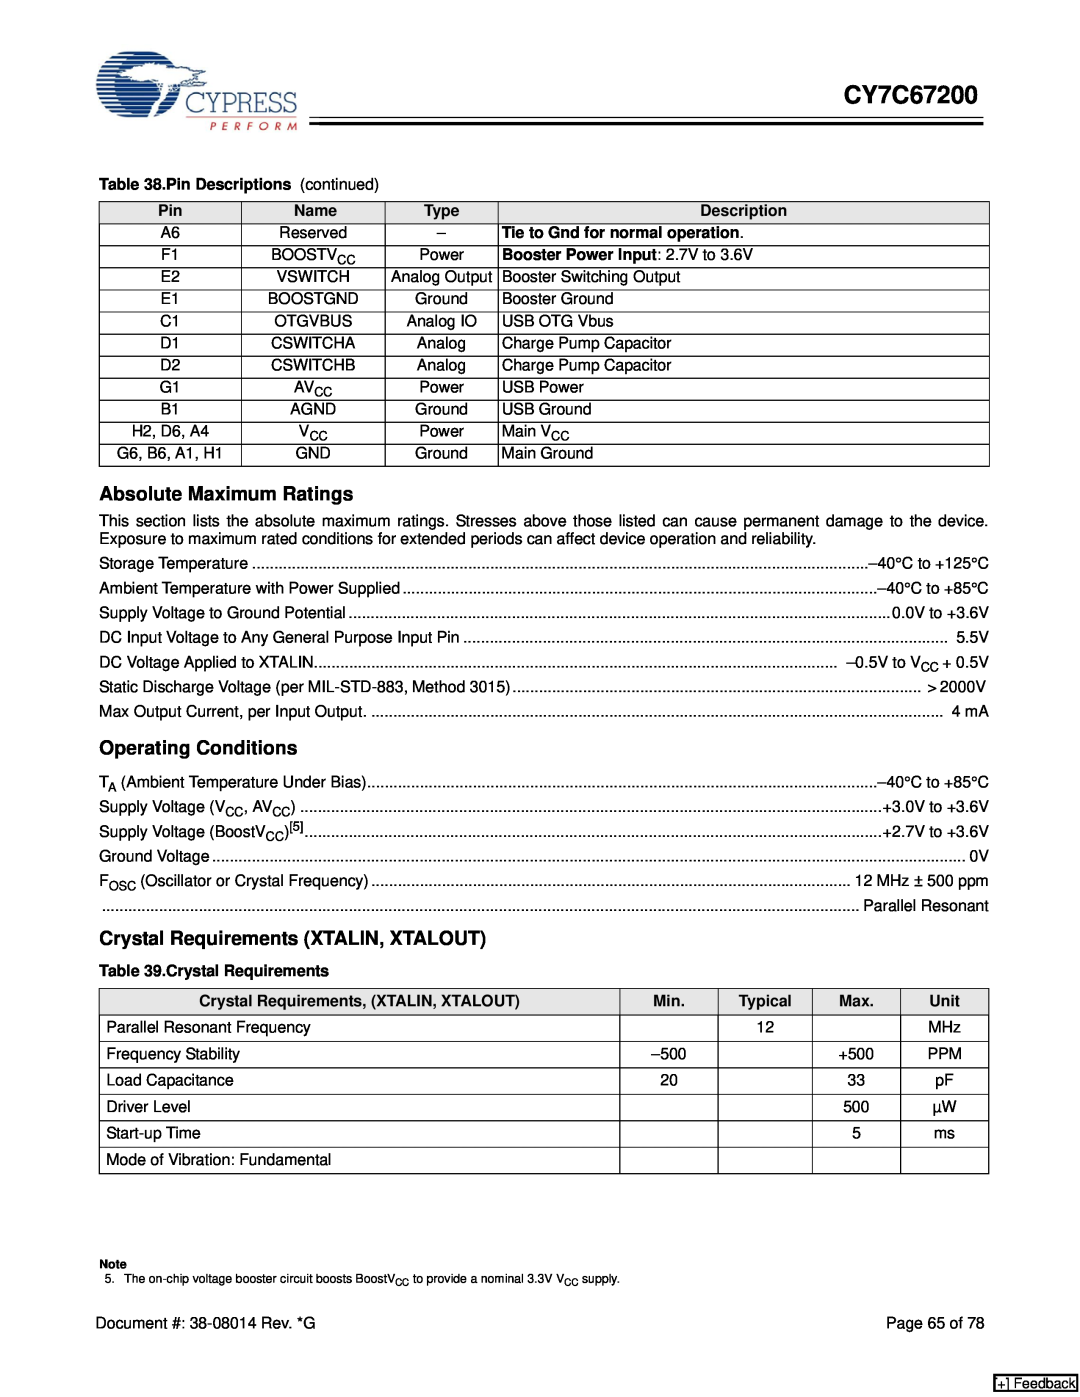 Cypress CY7C67200 manual Absolute Maximum Ratings, Operating Conditions, Crystal Requirements XTALIN, XTALOUT 